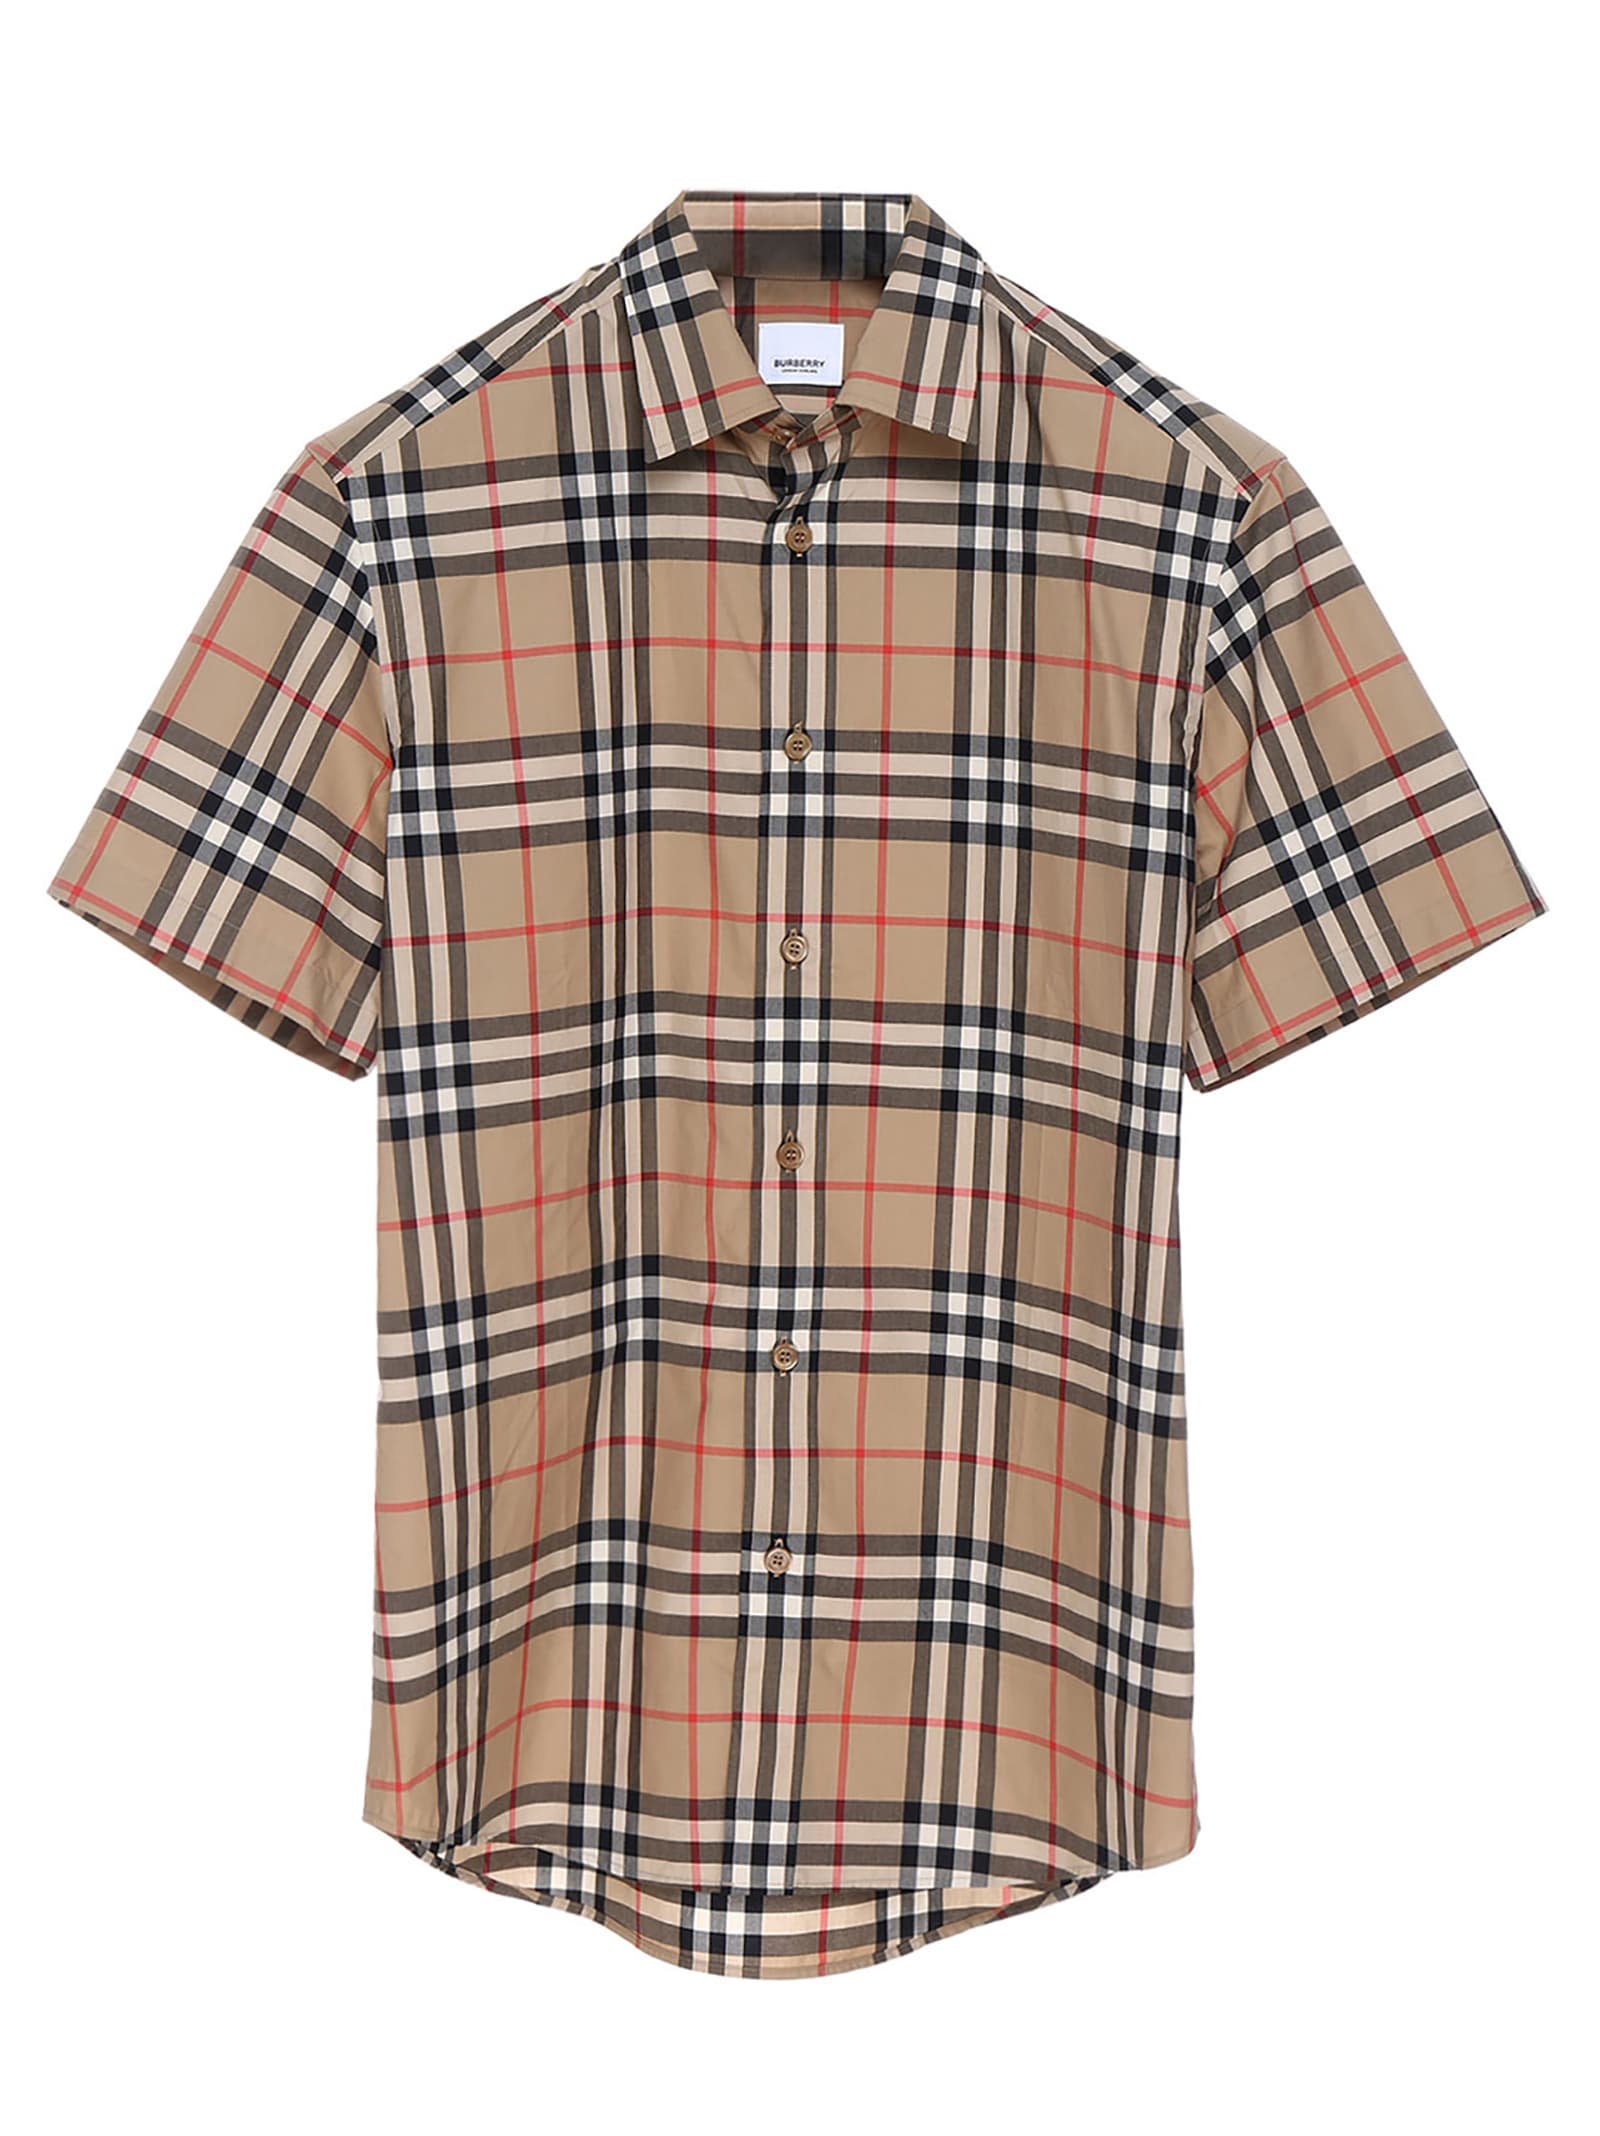 Burberry caxton Shirt